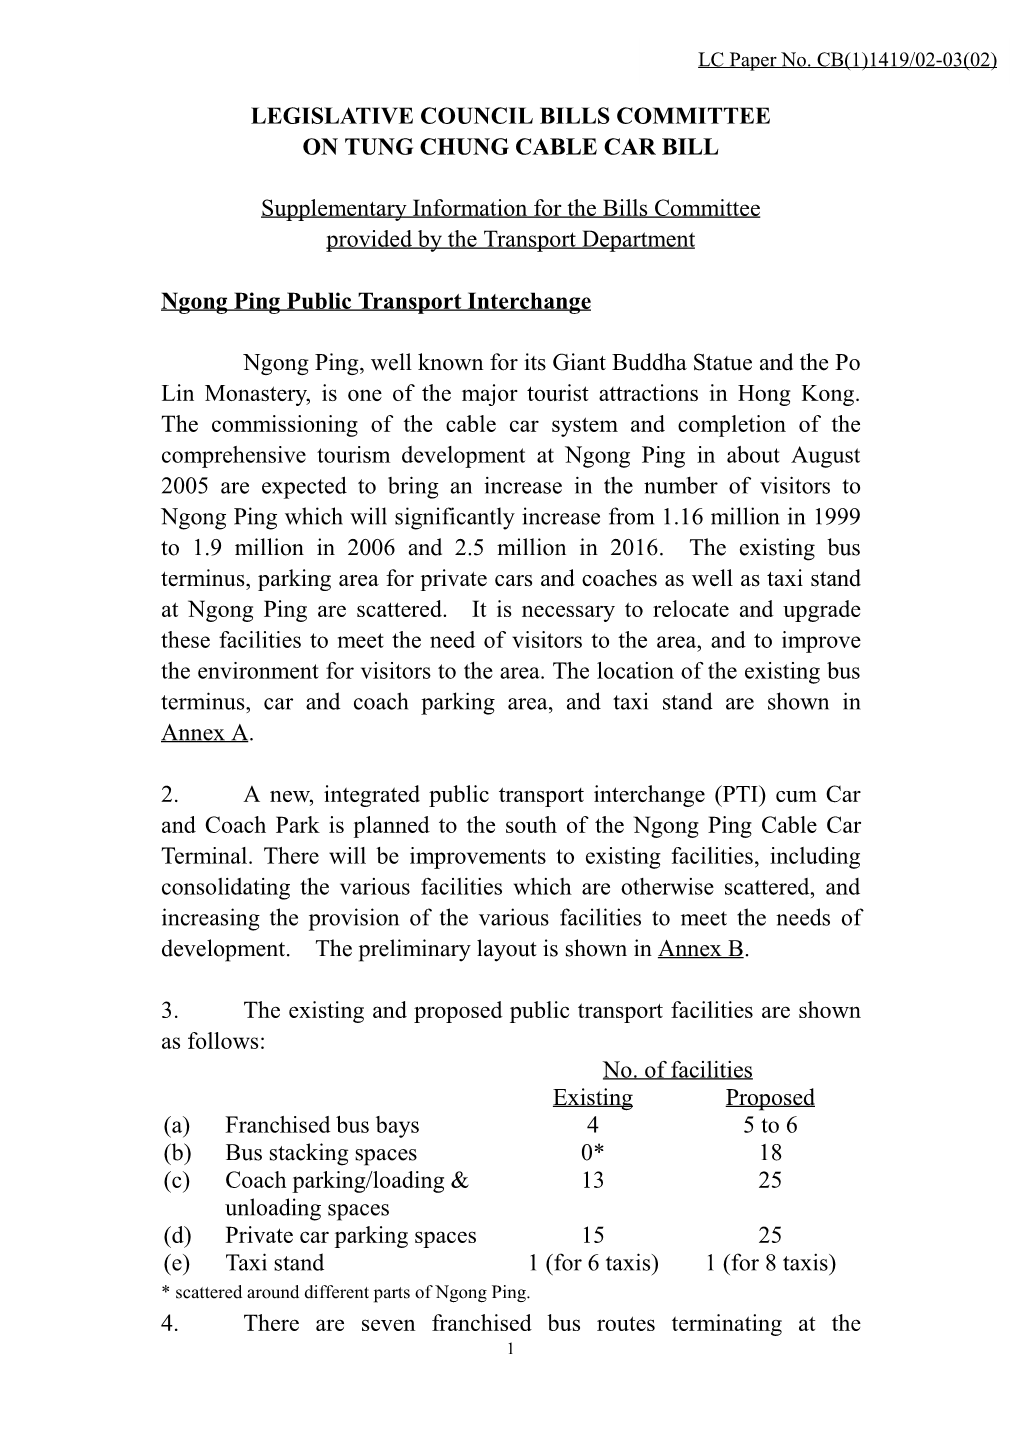 Legislative Council Bills Committee on Tung Chung Cable Car Bill